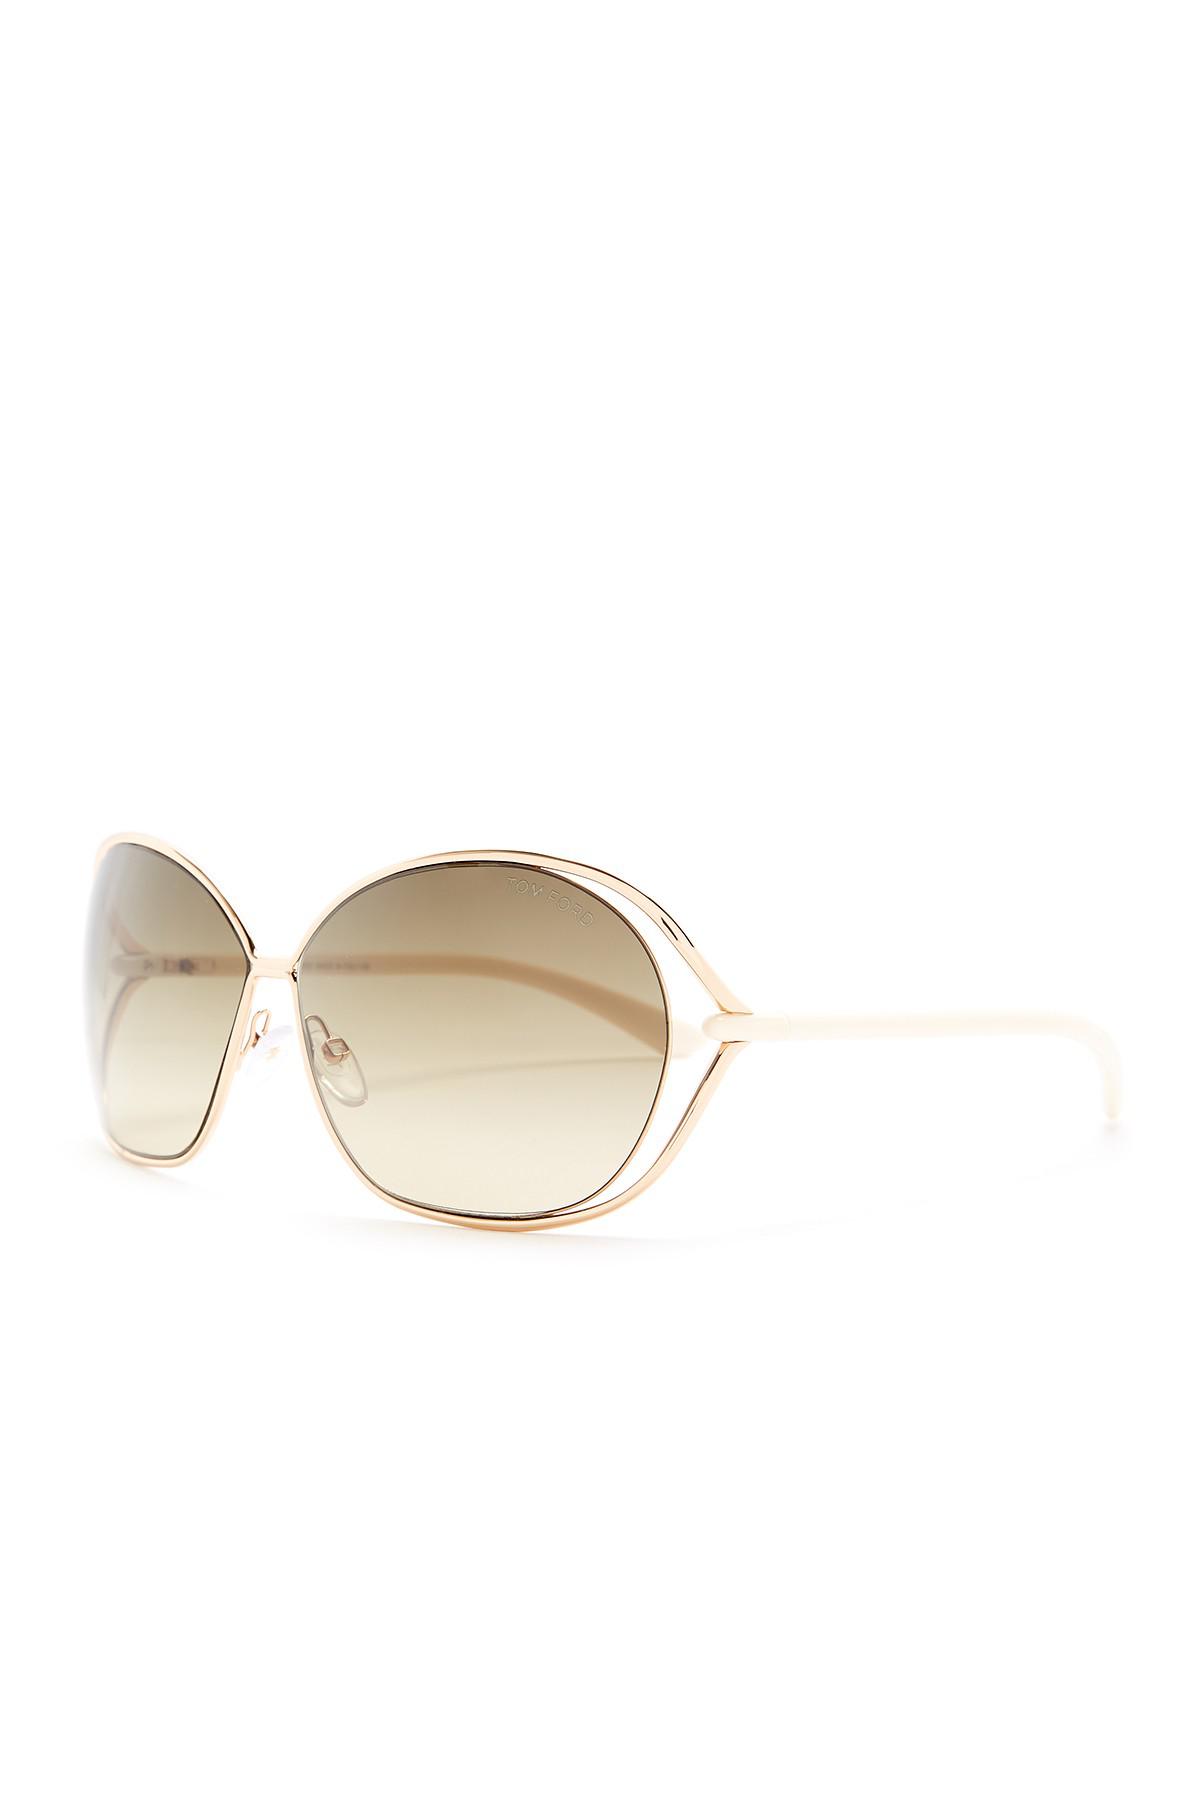 Tom Ford Women's Carla 66mm Oversized Round Metal Sunglasses | Lyst